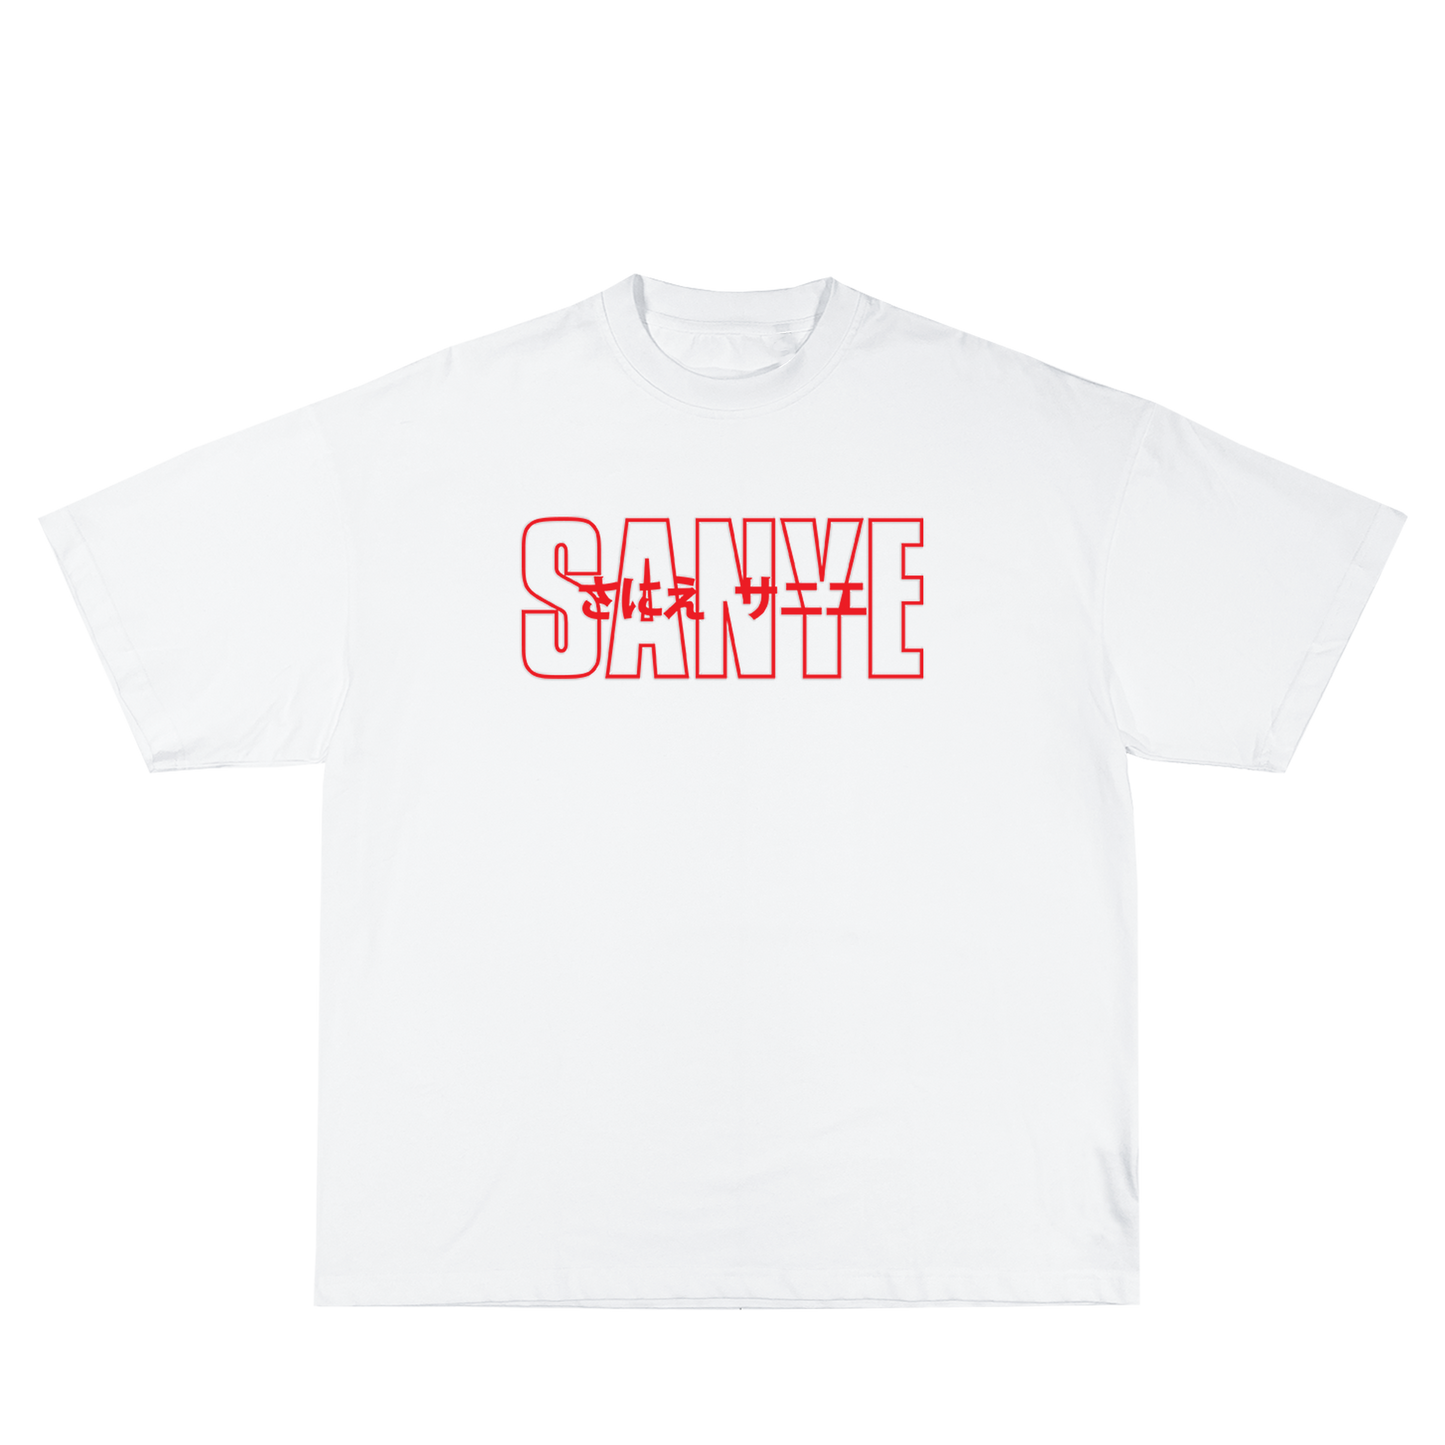 "Sanyé" Essential Series T-Shirt - White